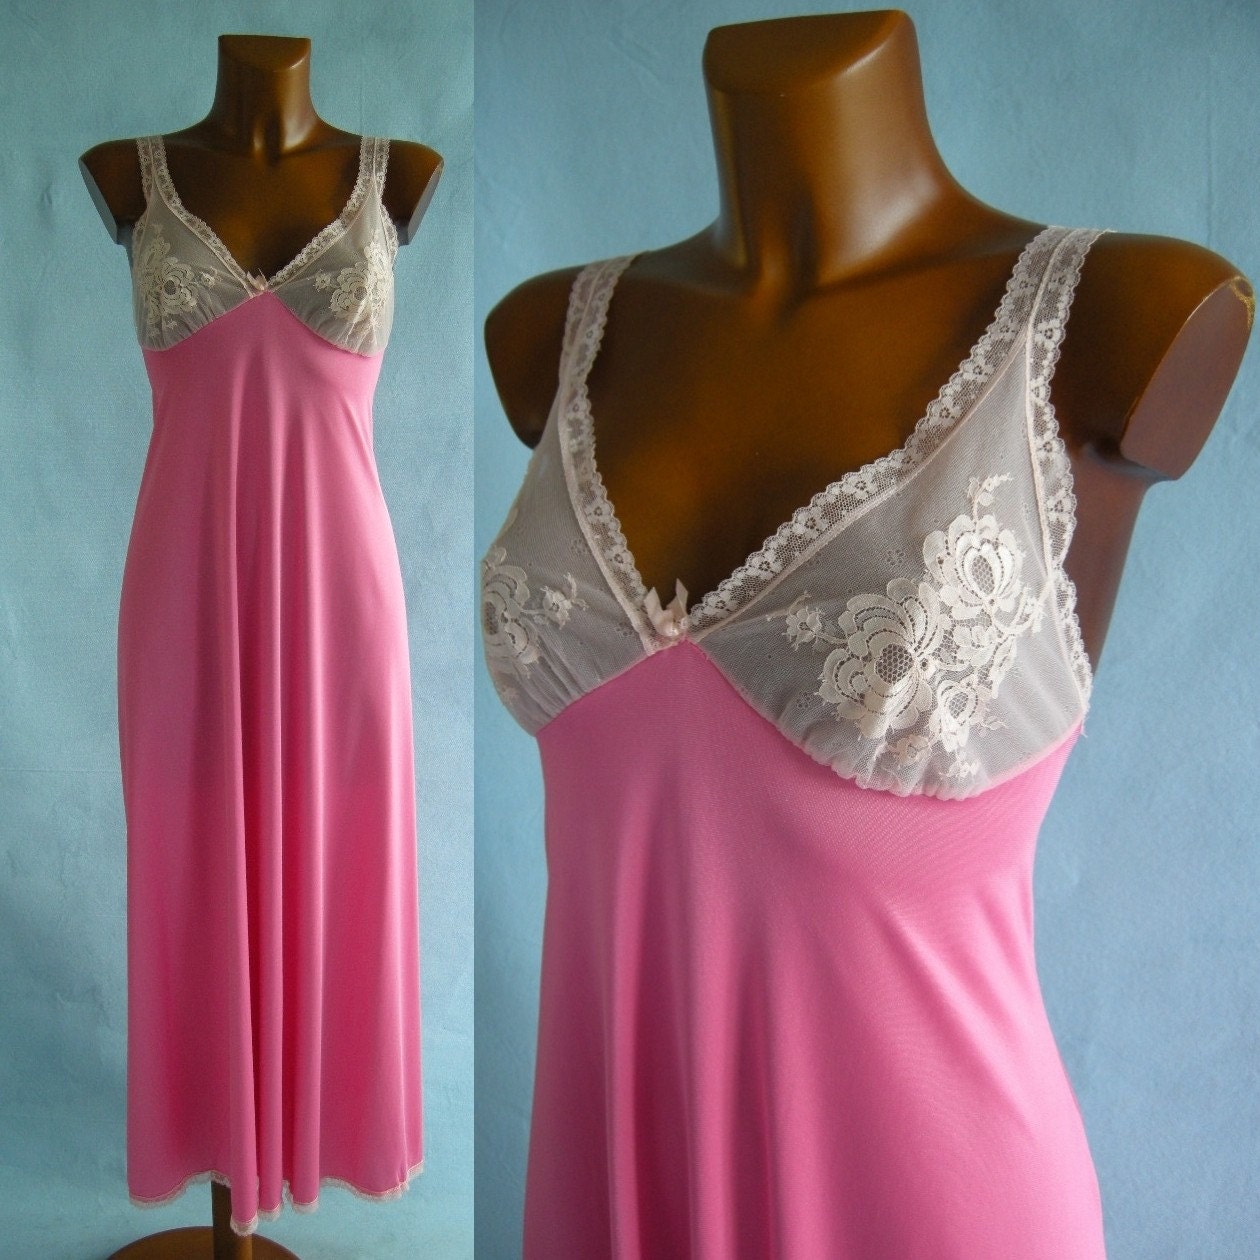 sheer lace wedding dress antique pink